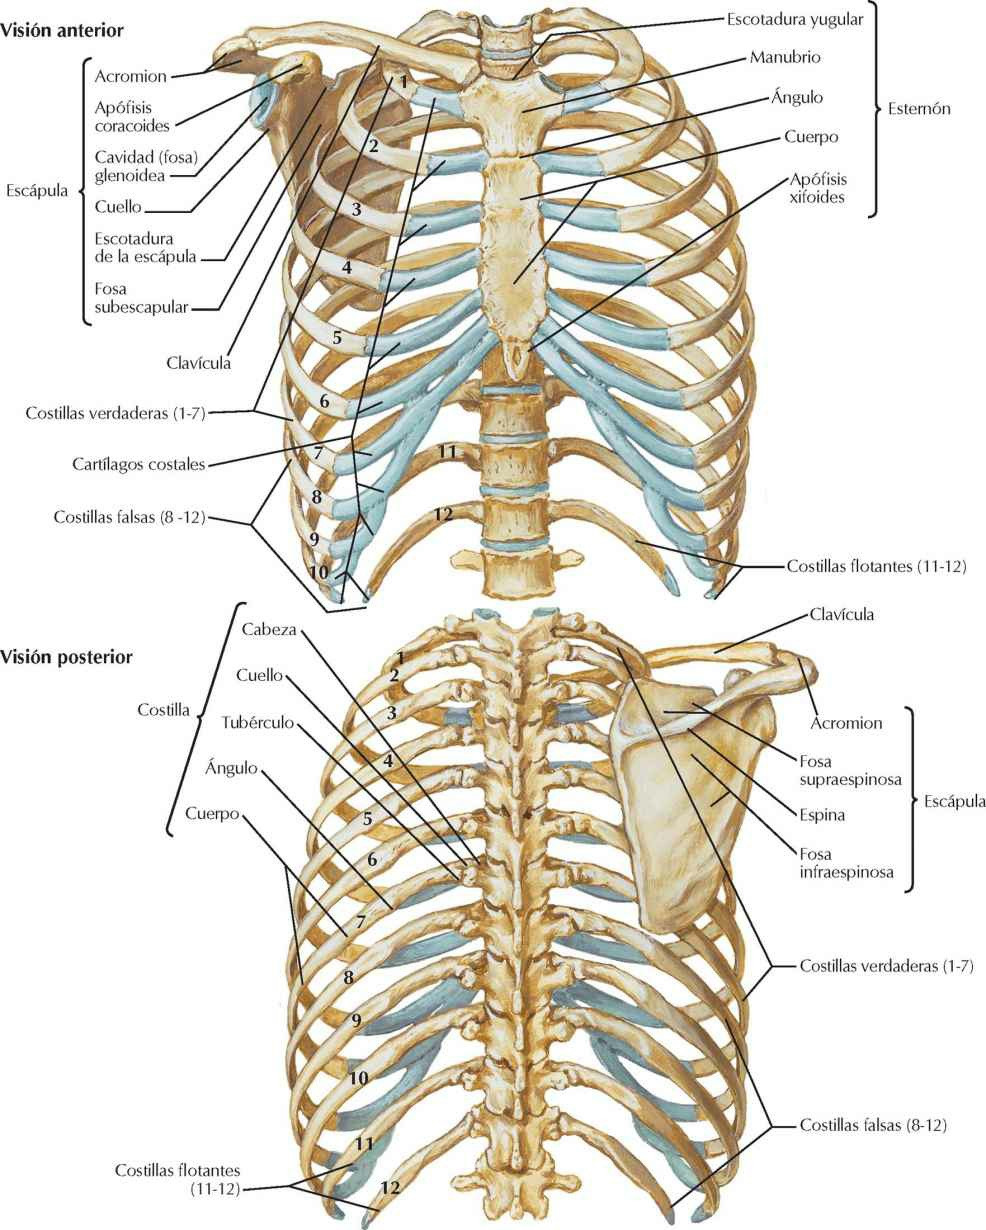 Esqueleto óseo del tórax